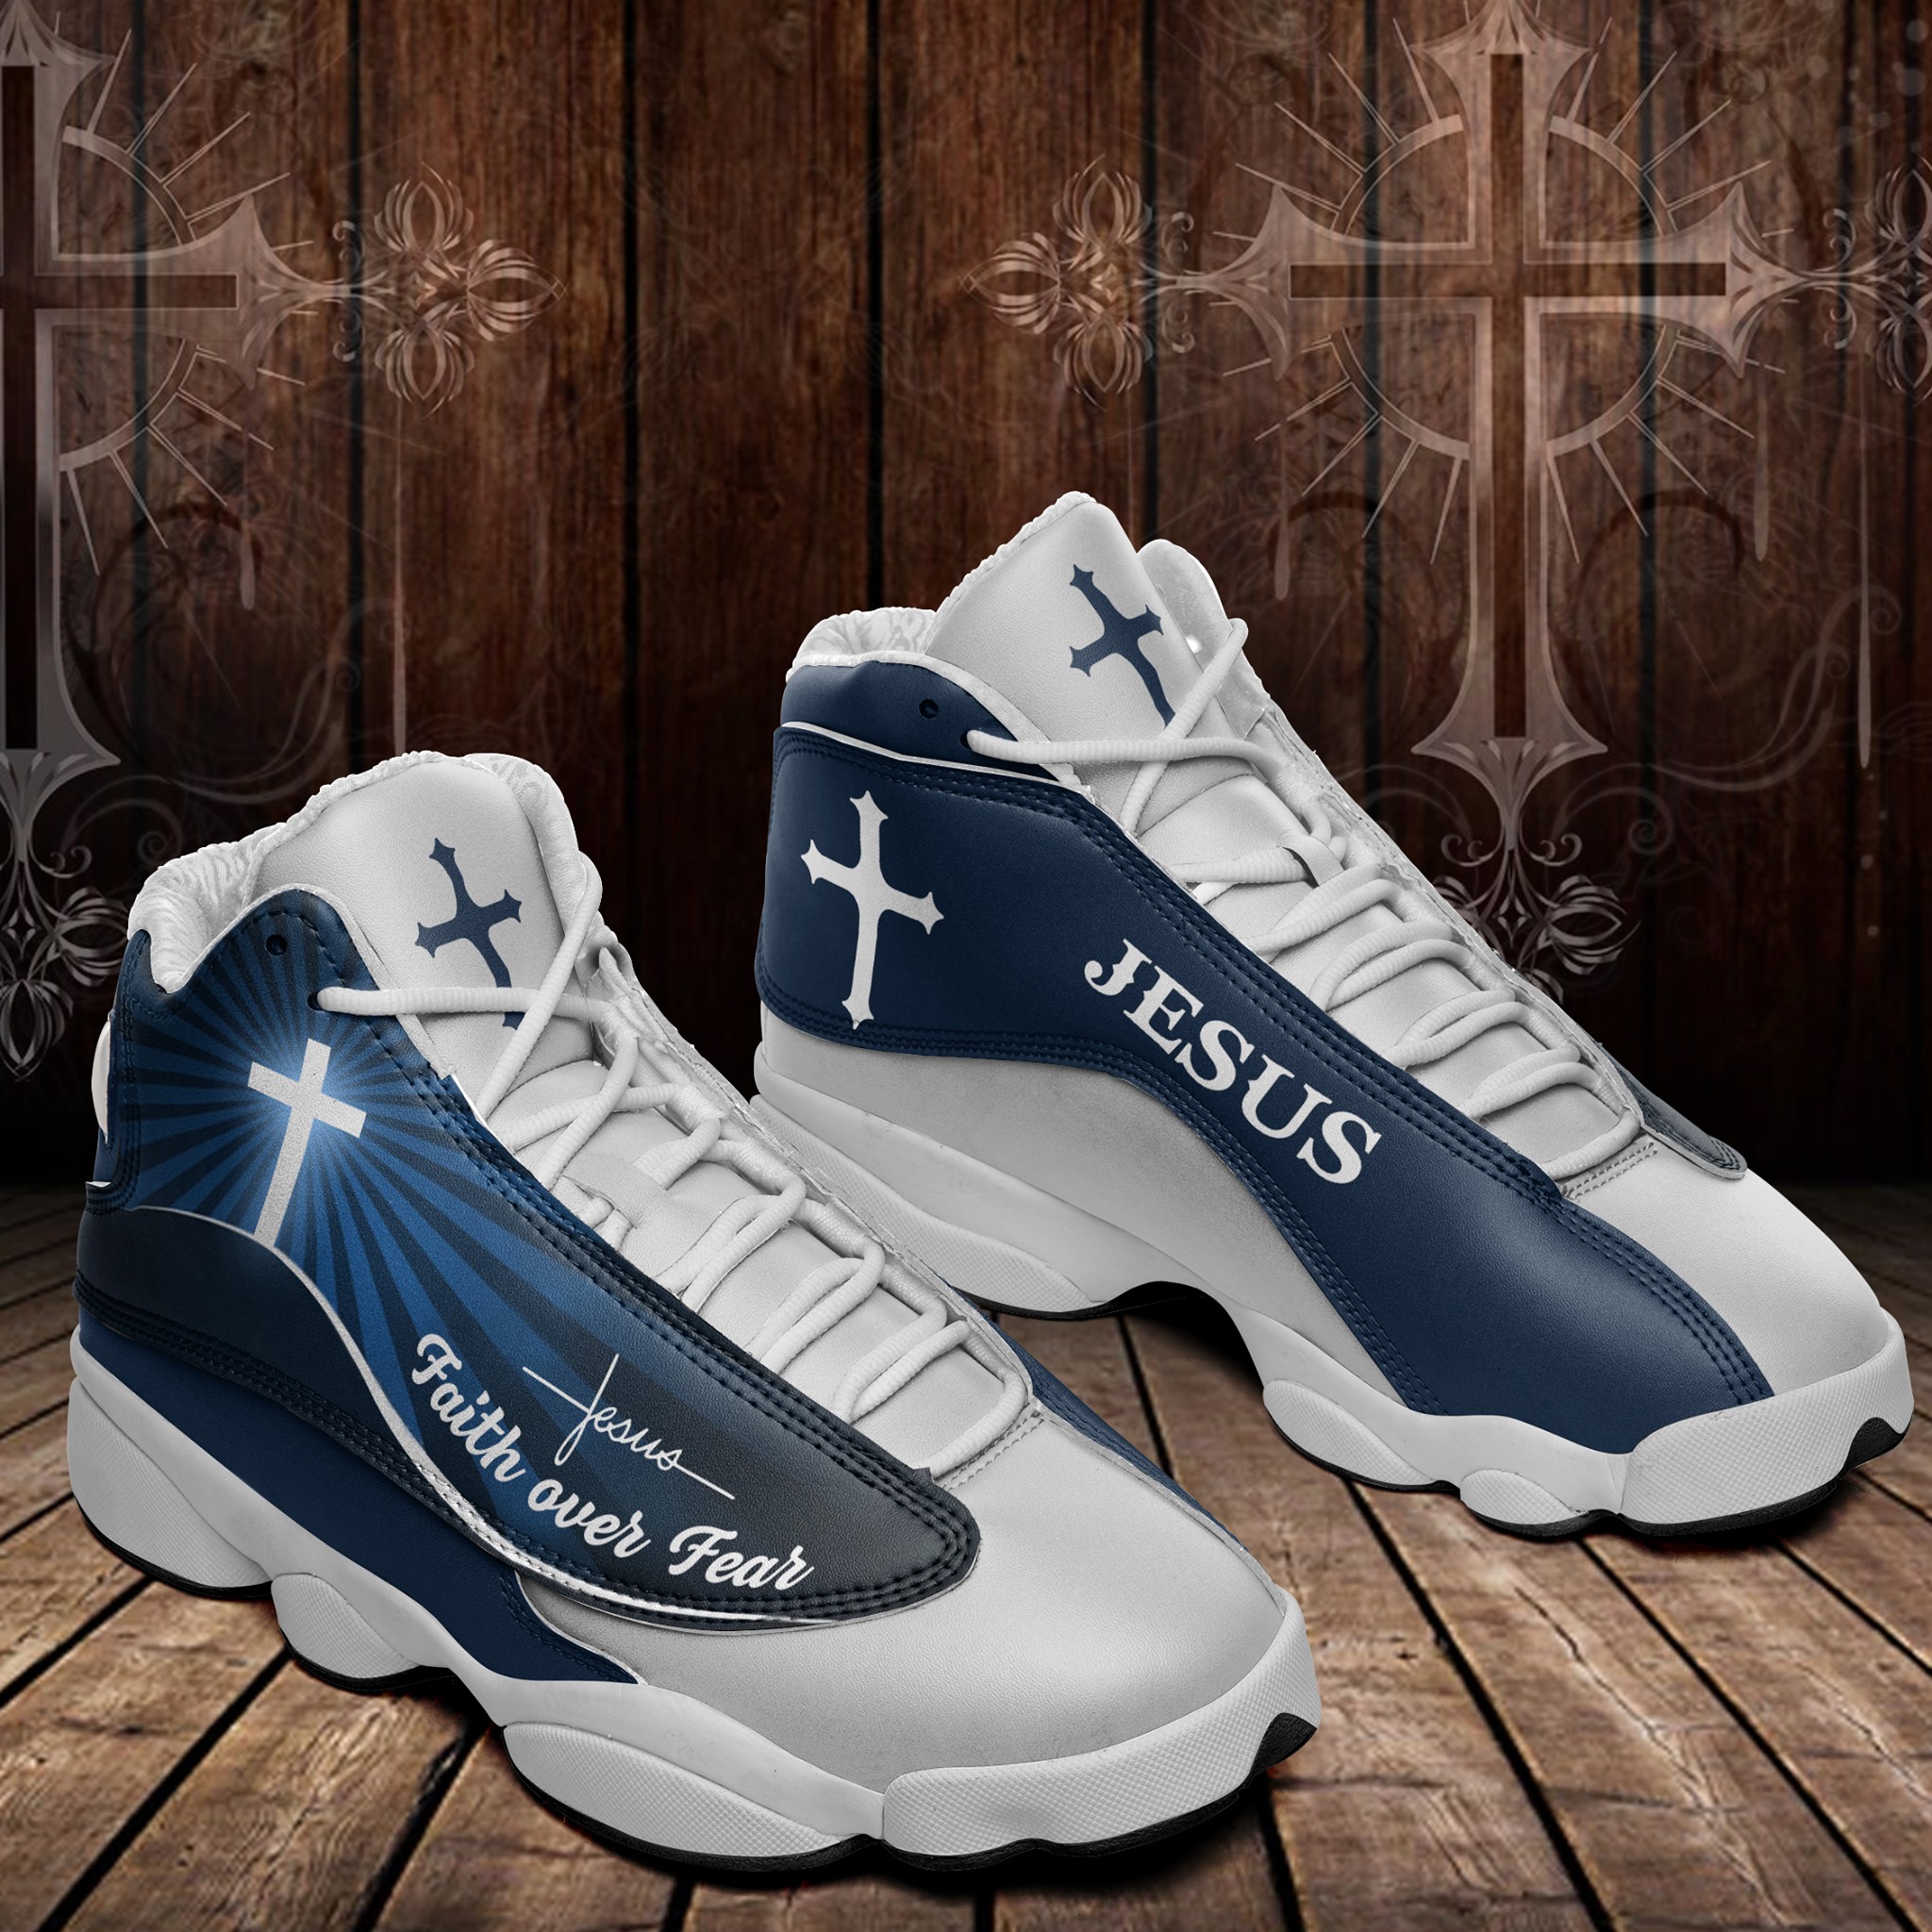 14 Jesus Faith over fear jordan 13 sneakers 1